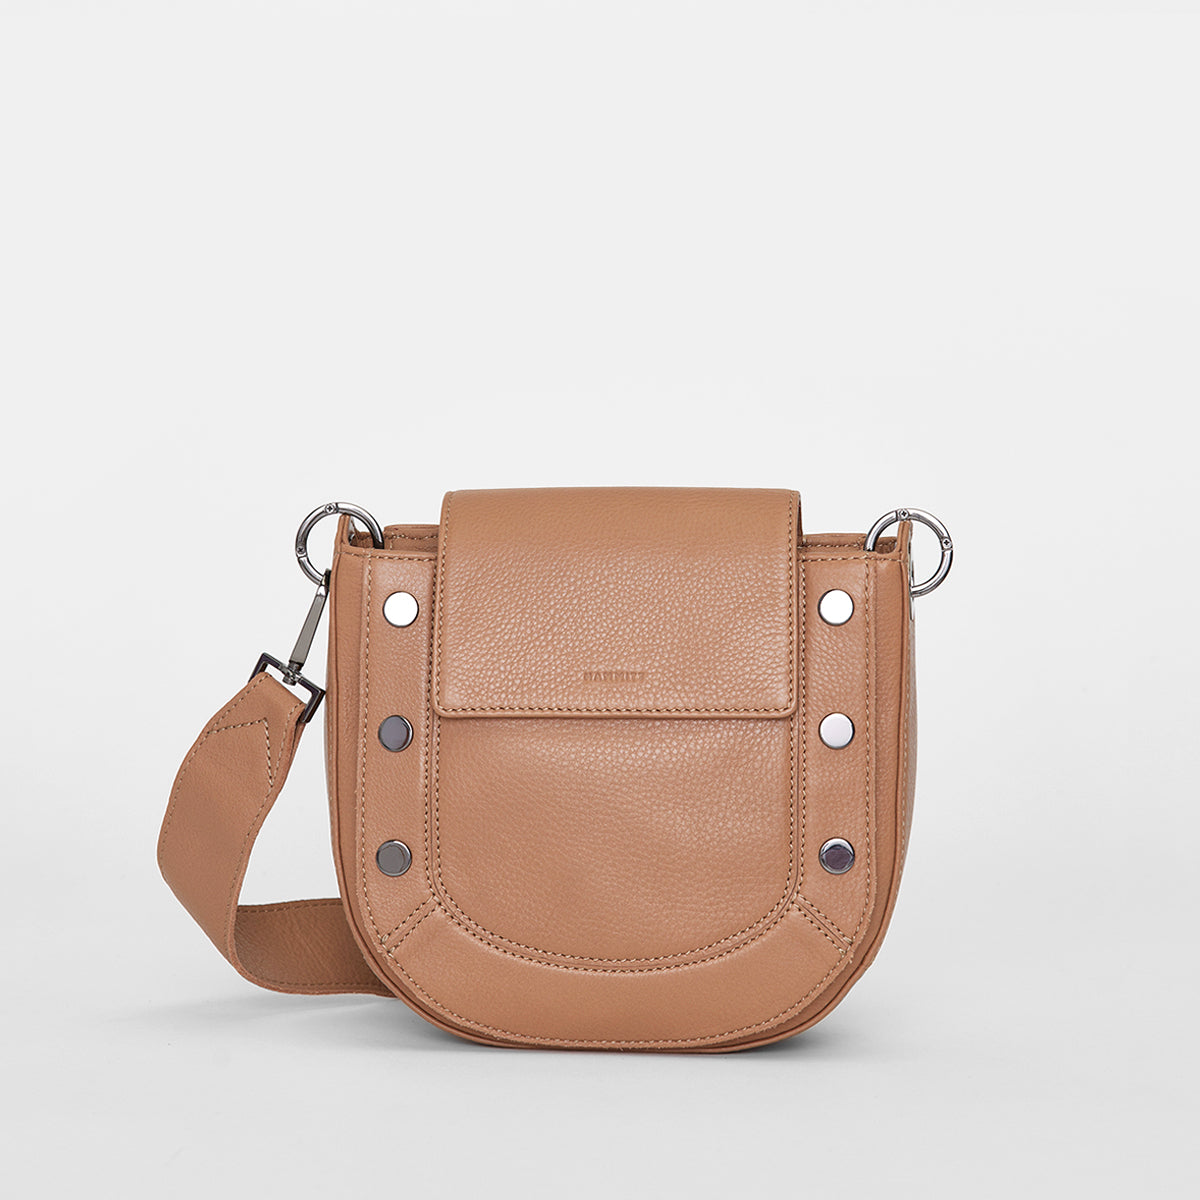 Brand New Primark Handbag